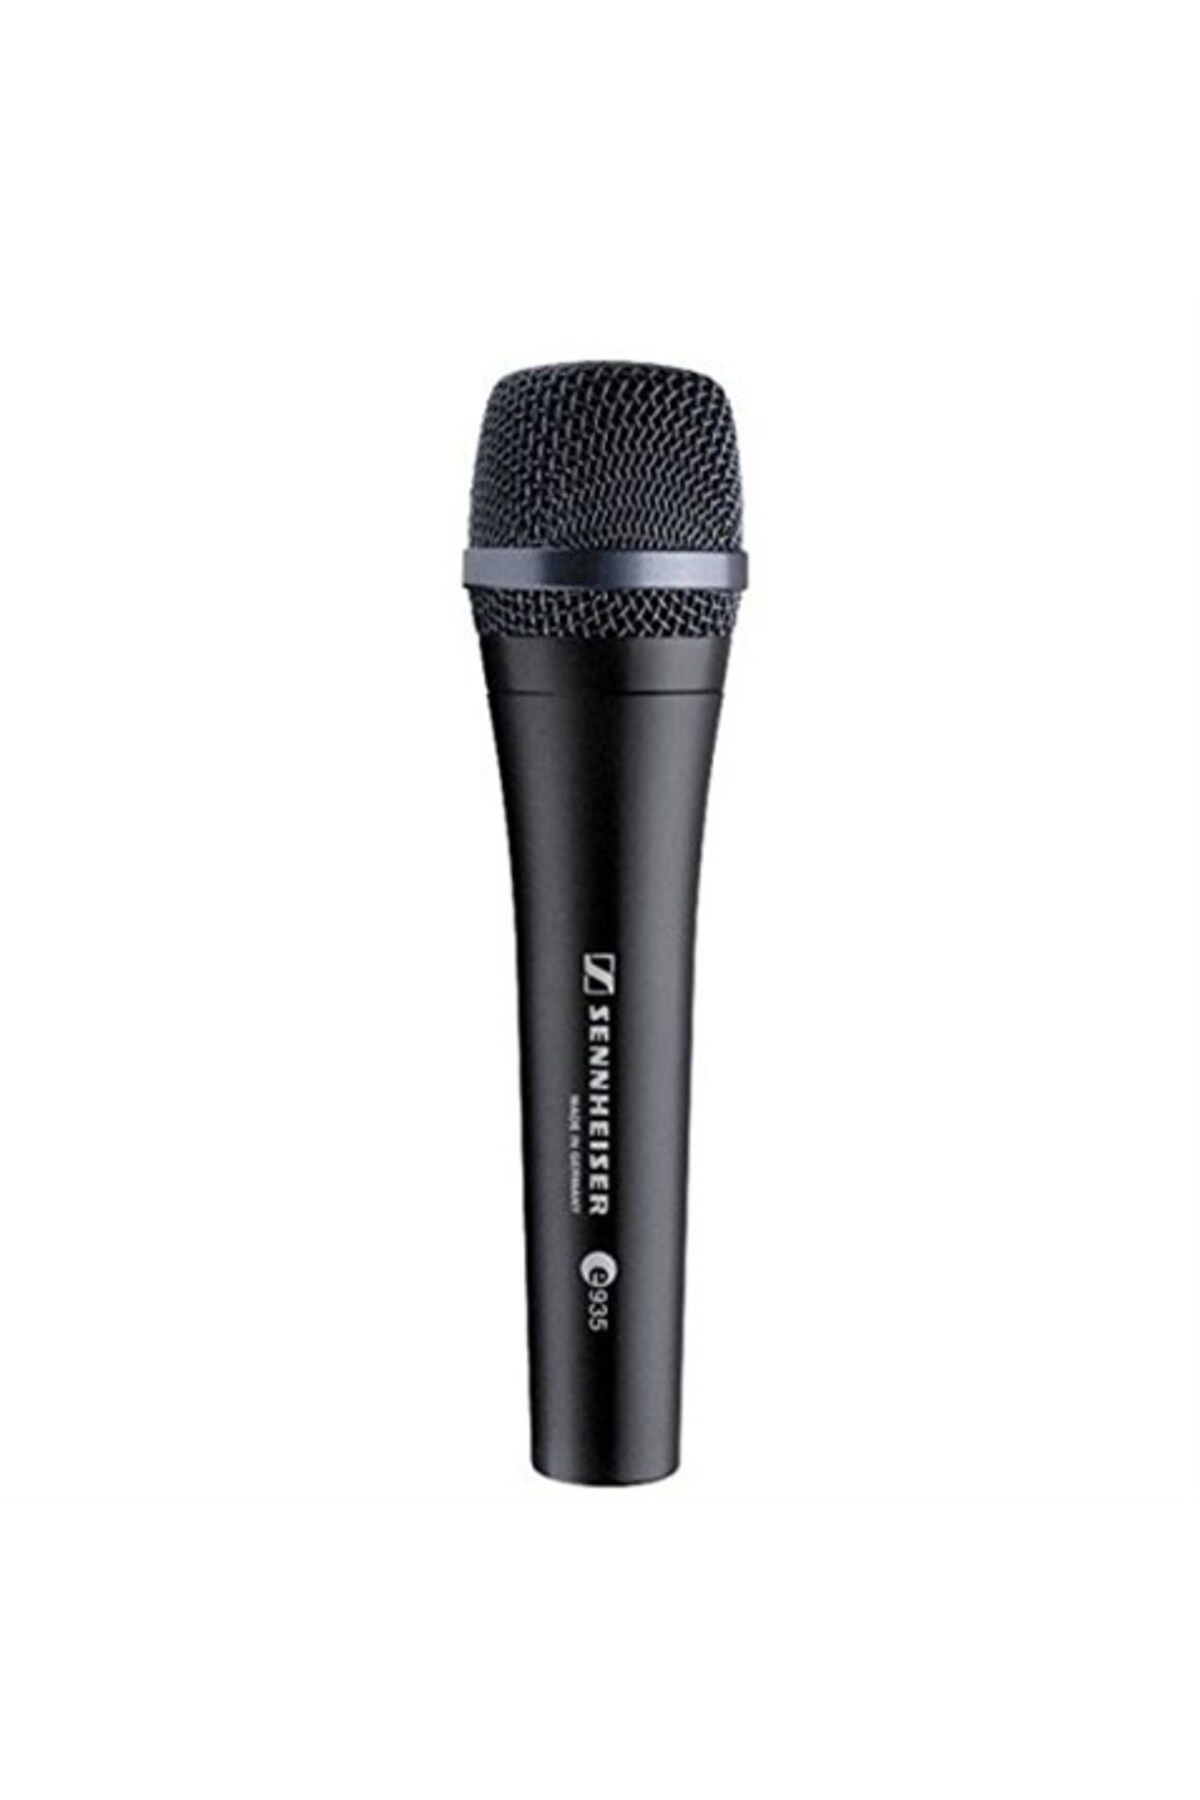 Sennheiser E 935 Dinamik Kardioid Vokal Mikrofonu